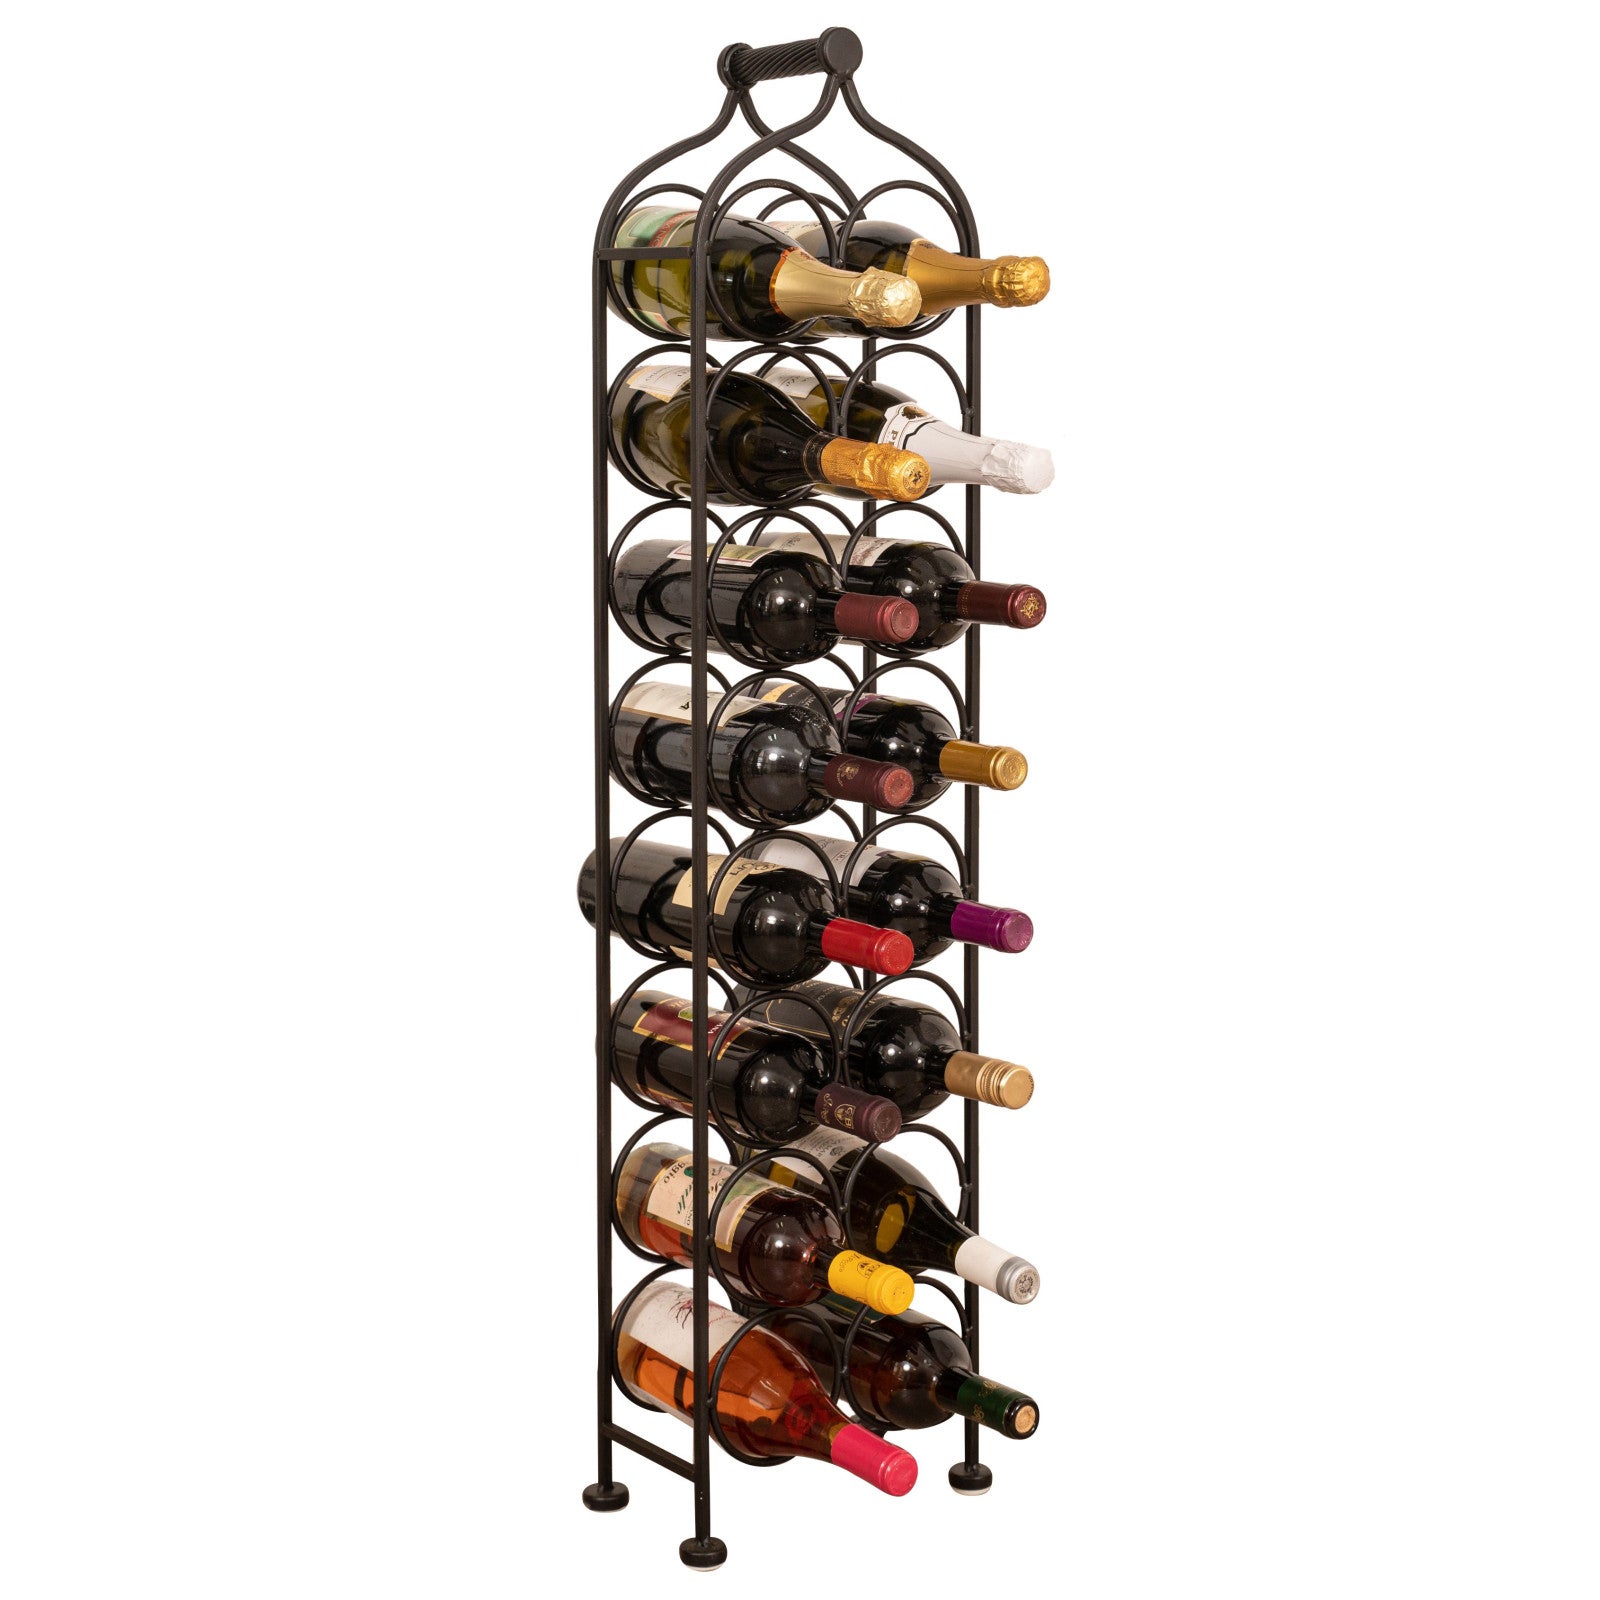 Porta Bottiglie Vino in ferro battuto, 8 bott. |Porta Bottiglie da terra  Metallo per Cantina, Sala da Pranzo, Cucina|Porta Bottiglie appoggiato a  muro